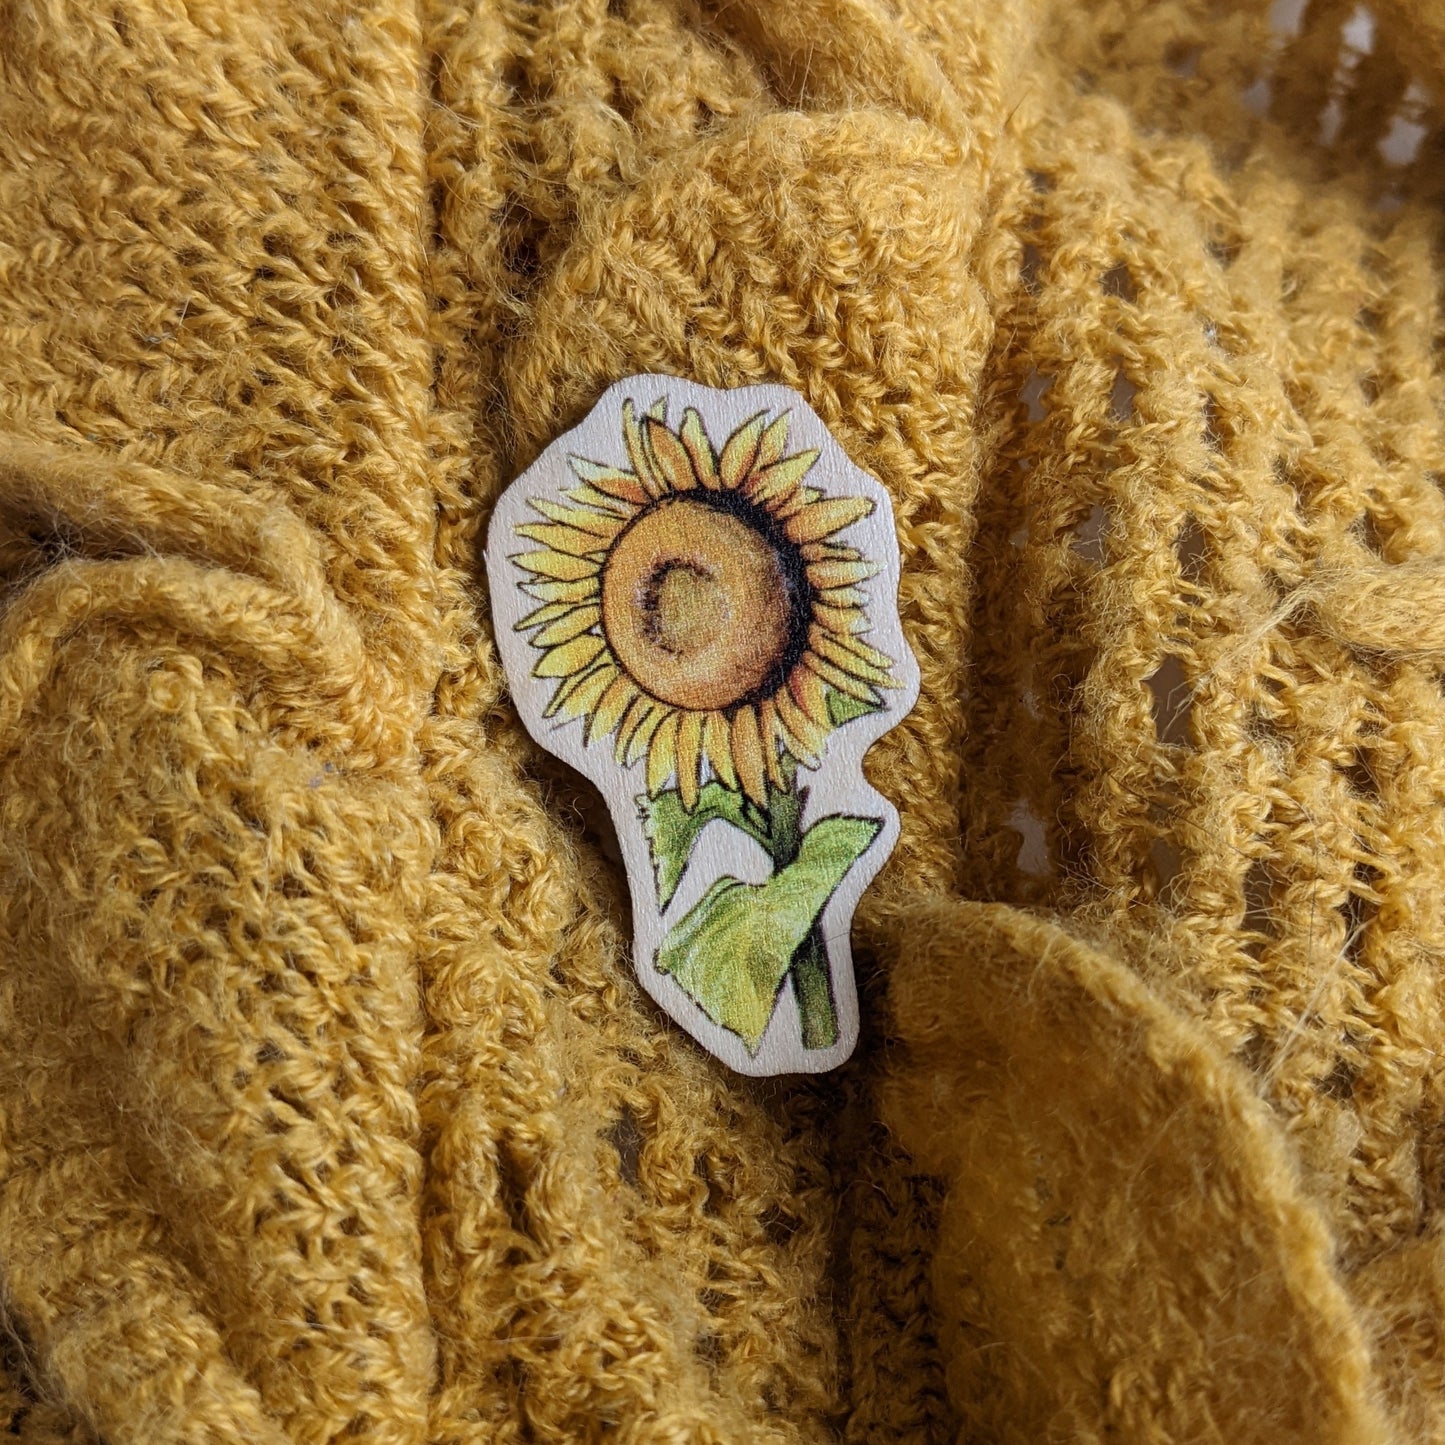 "Solidarity" Sunflower Pin